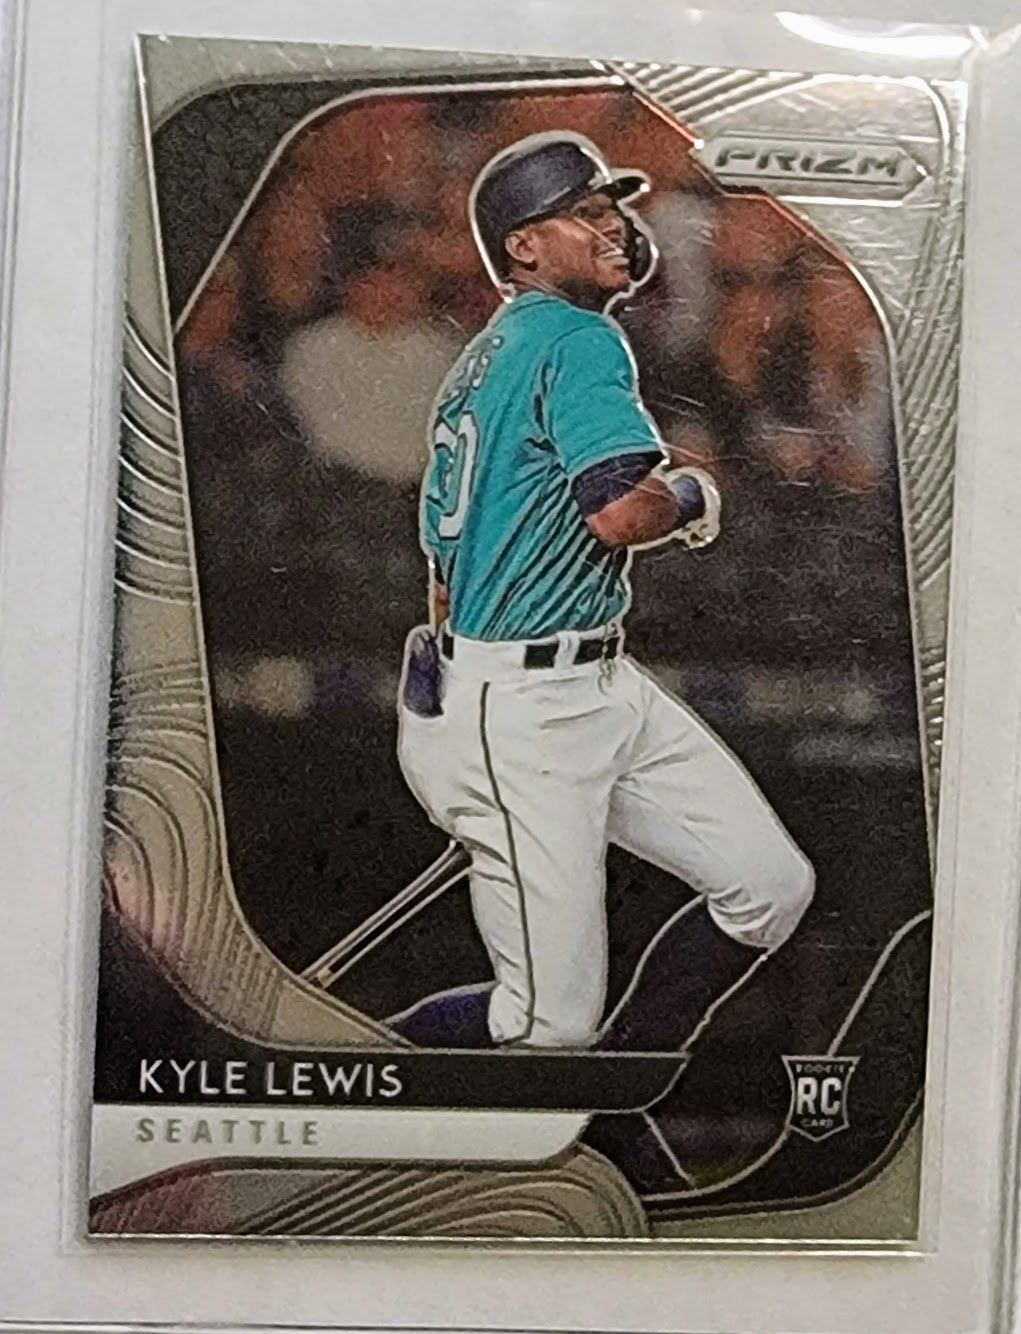 2020 Panini Prizm Kyle Lewis Rookie Baseball Card TPTV